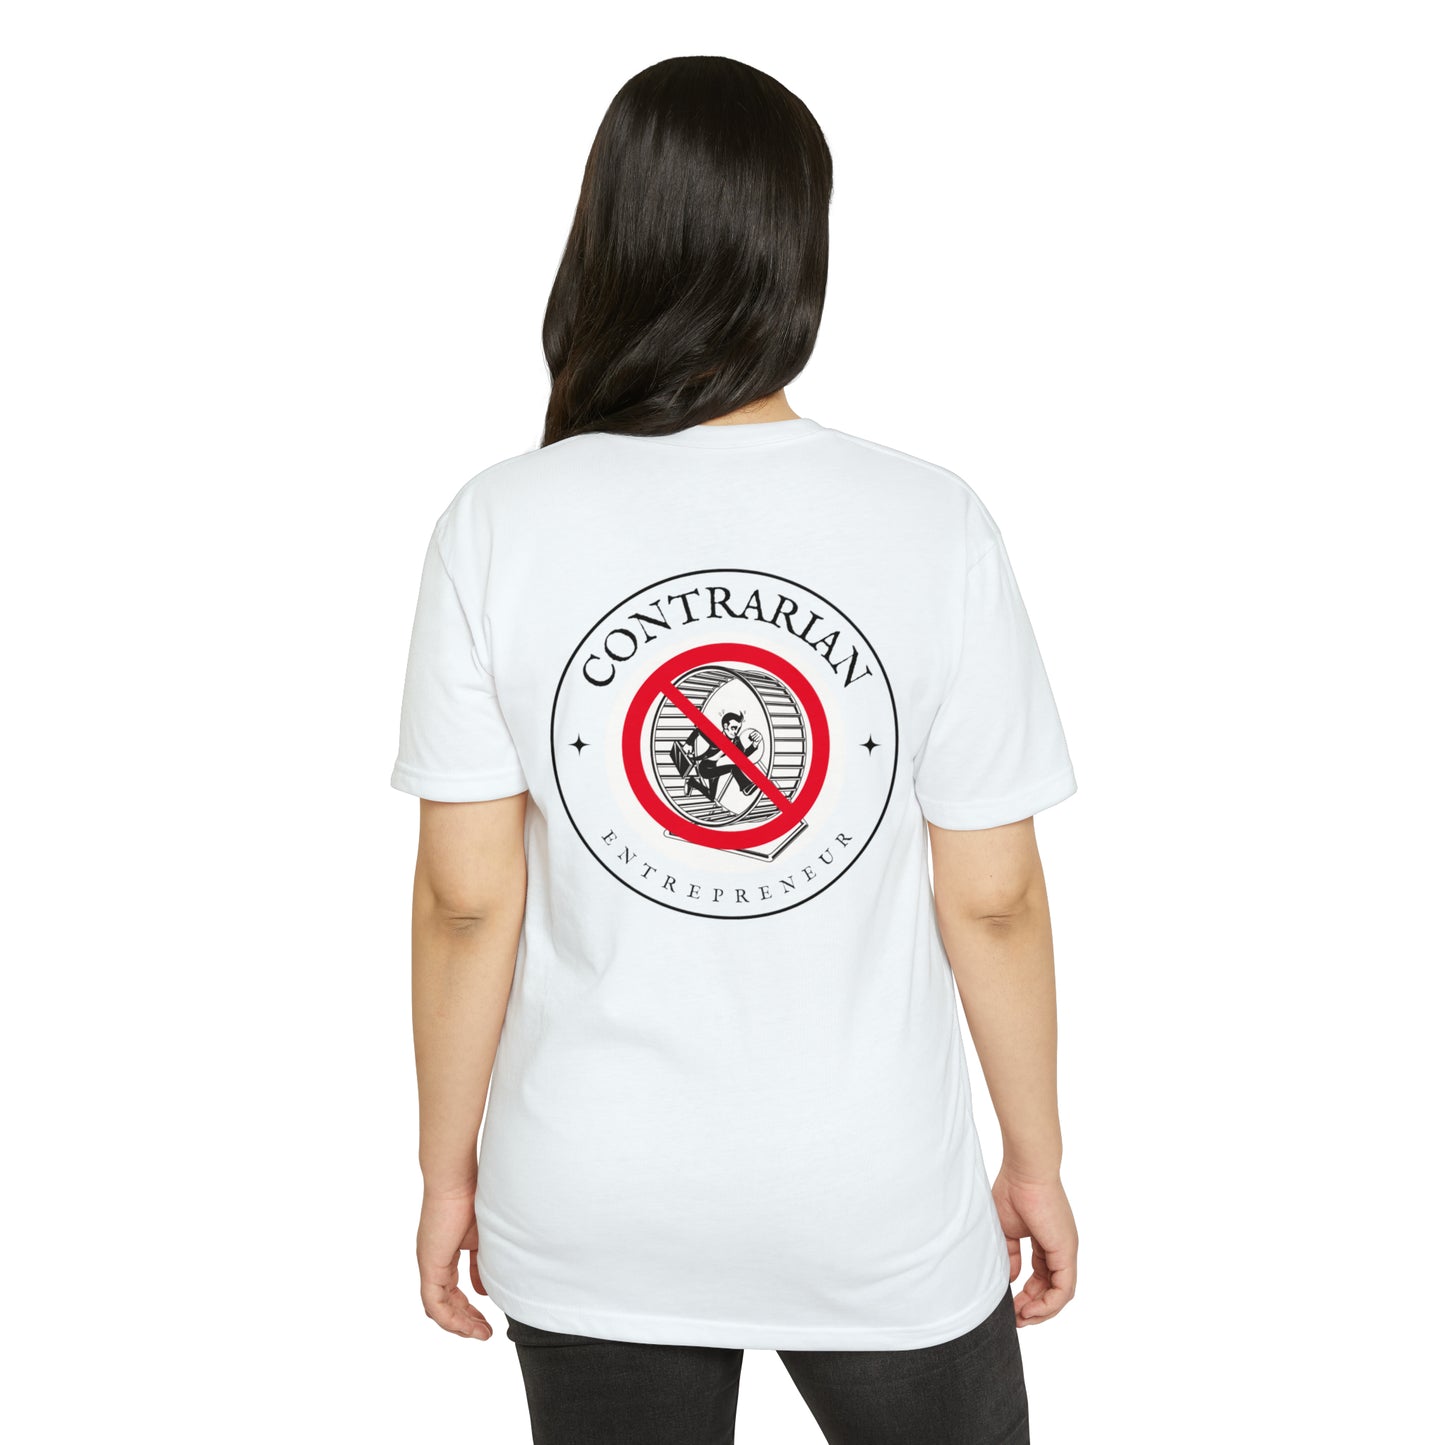 Sharpened Axe "Modern Day Slave" Jersey T-shirt